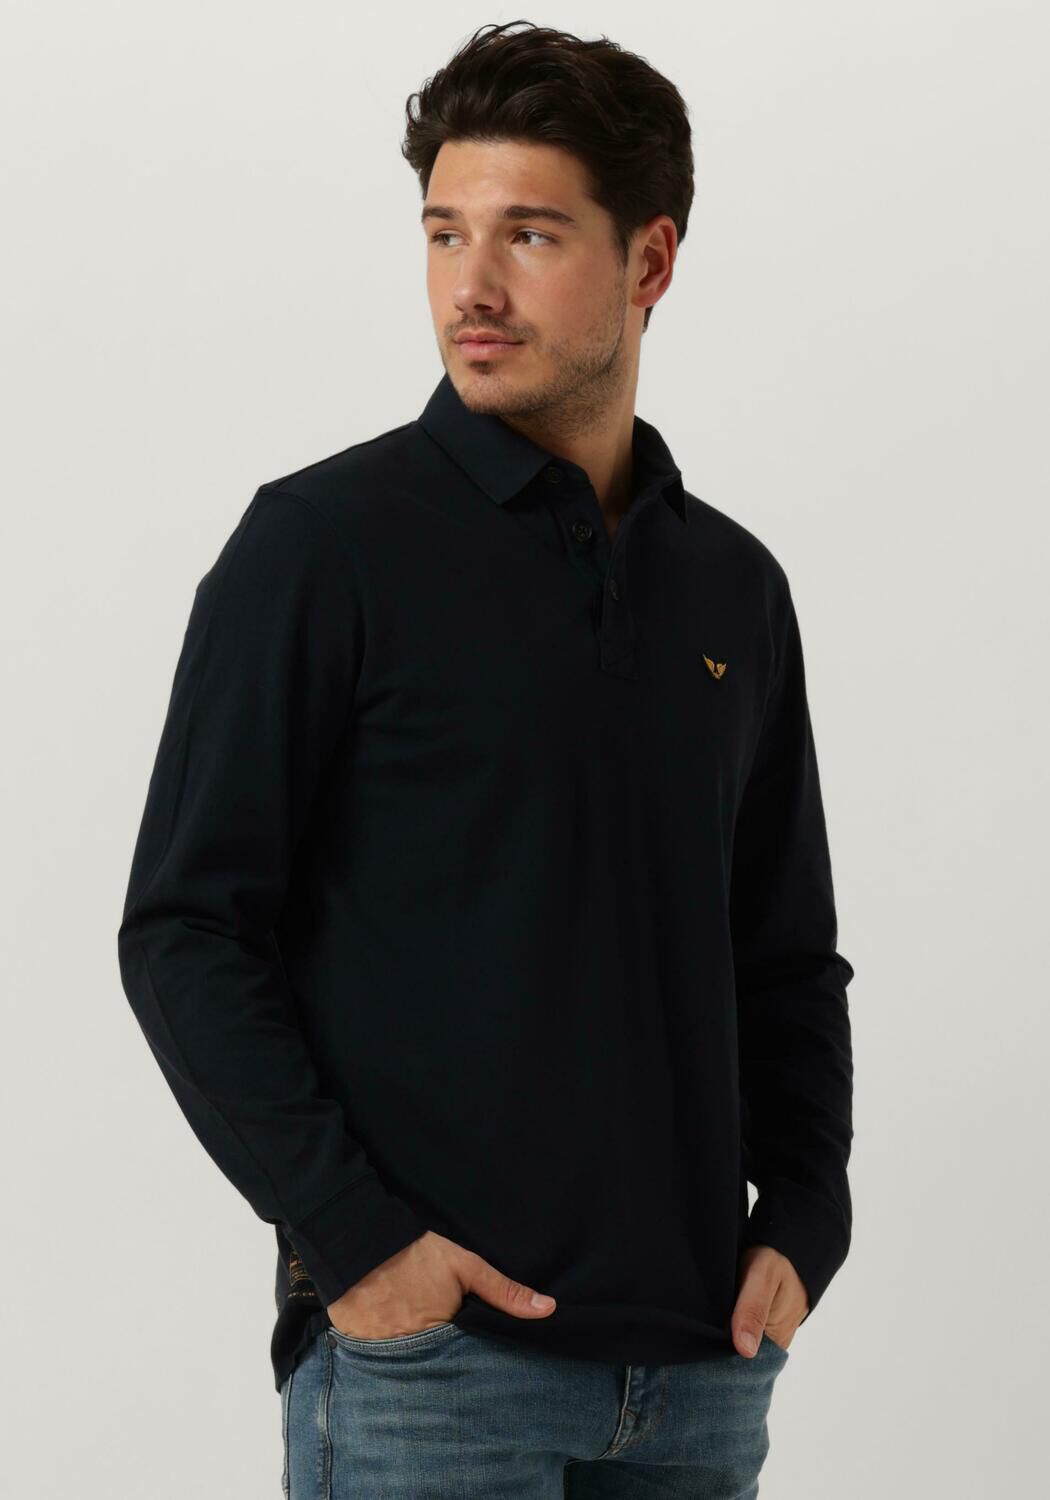 PME LEGEND Heren Polo's & T-shirts Long Sleeve Polo Pique Garment Dye Blauw